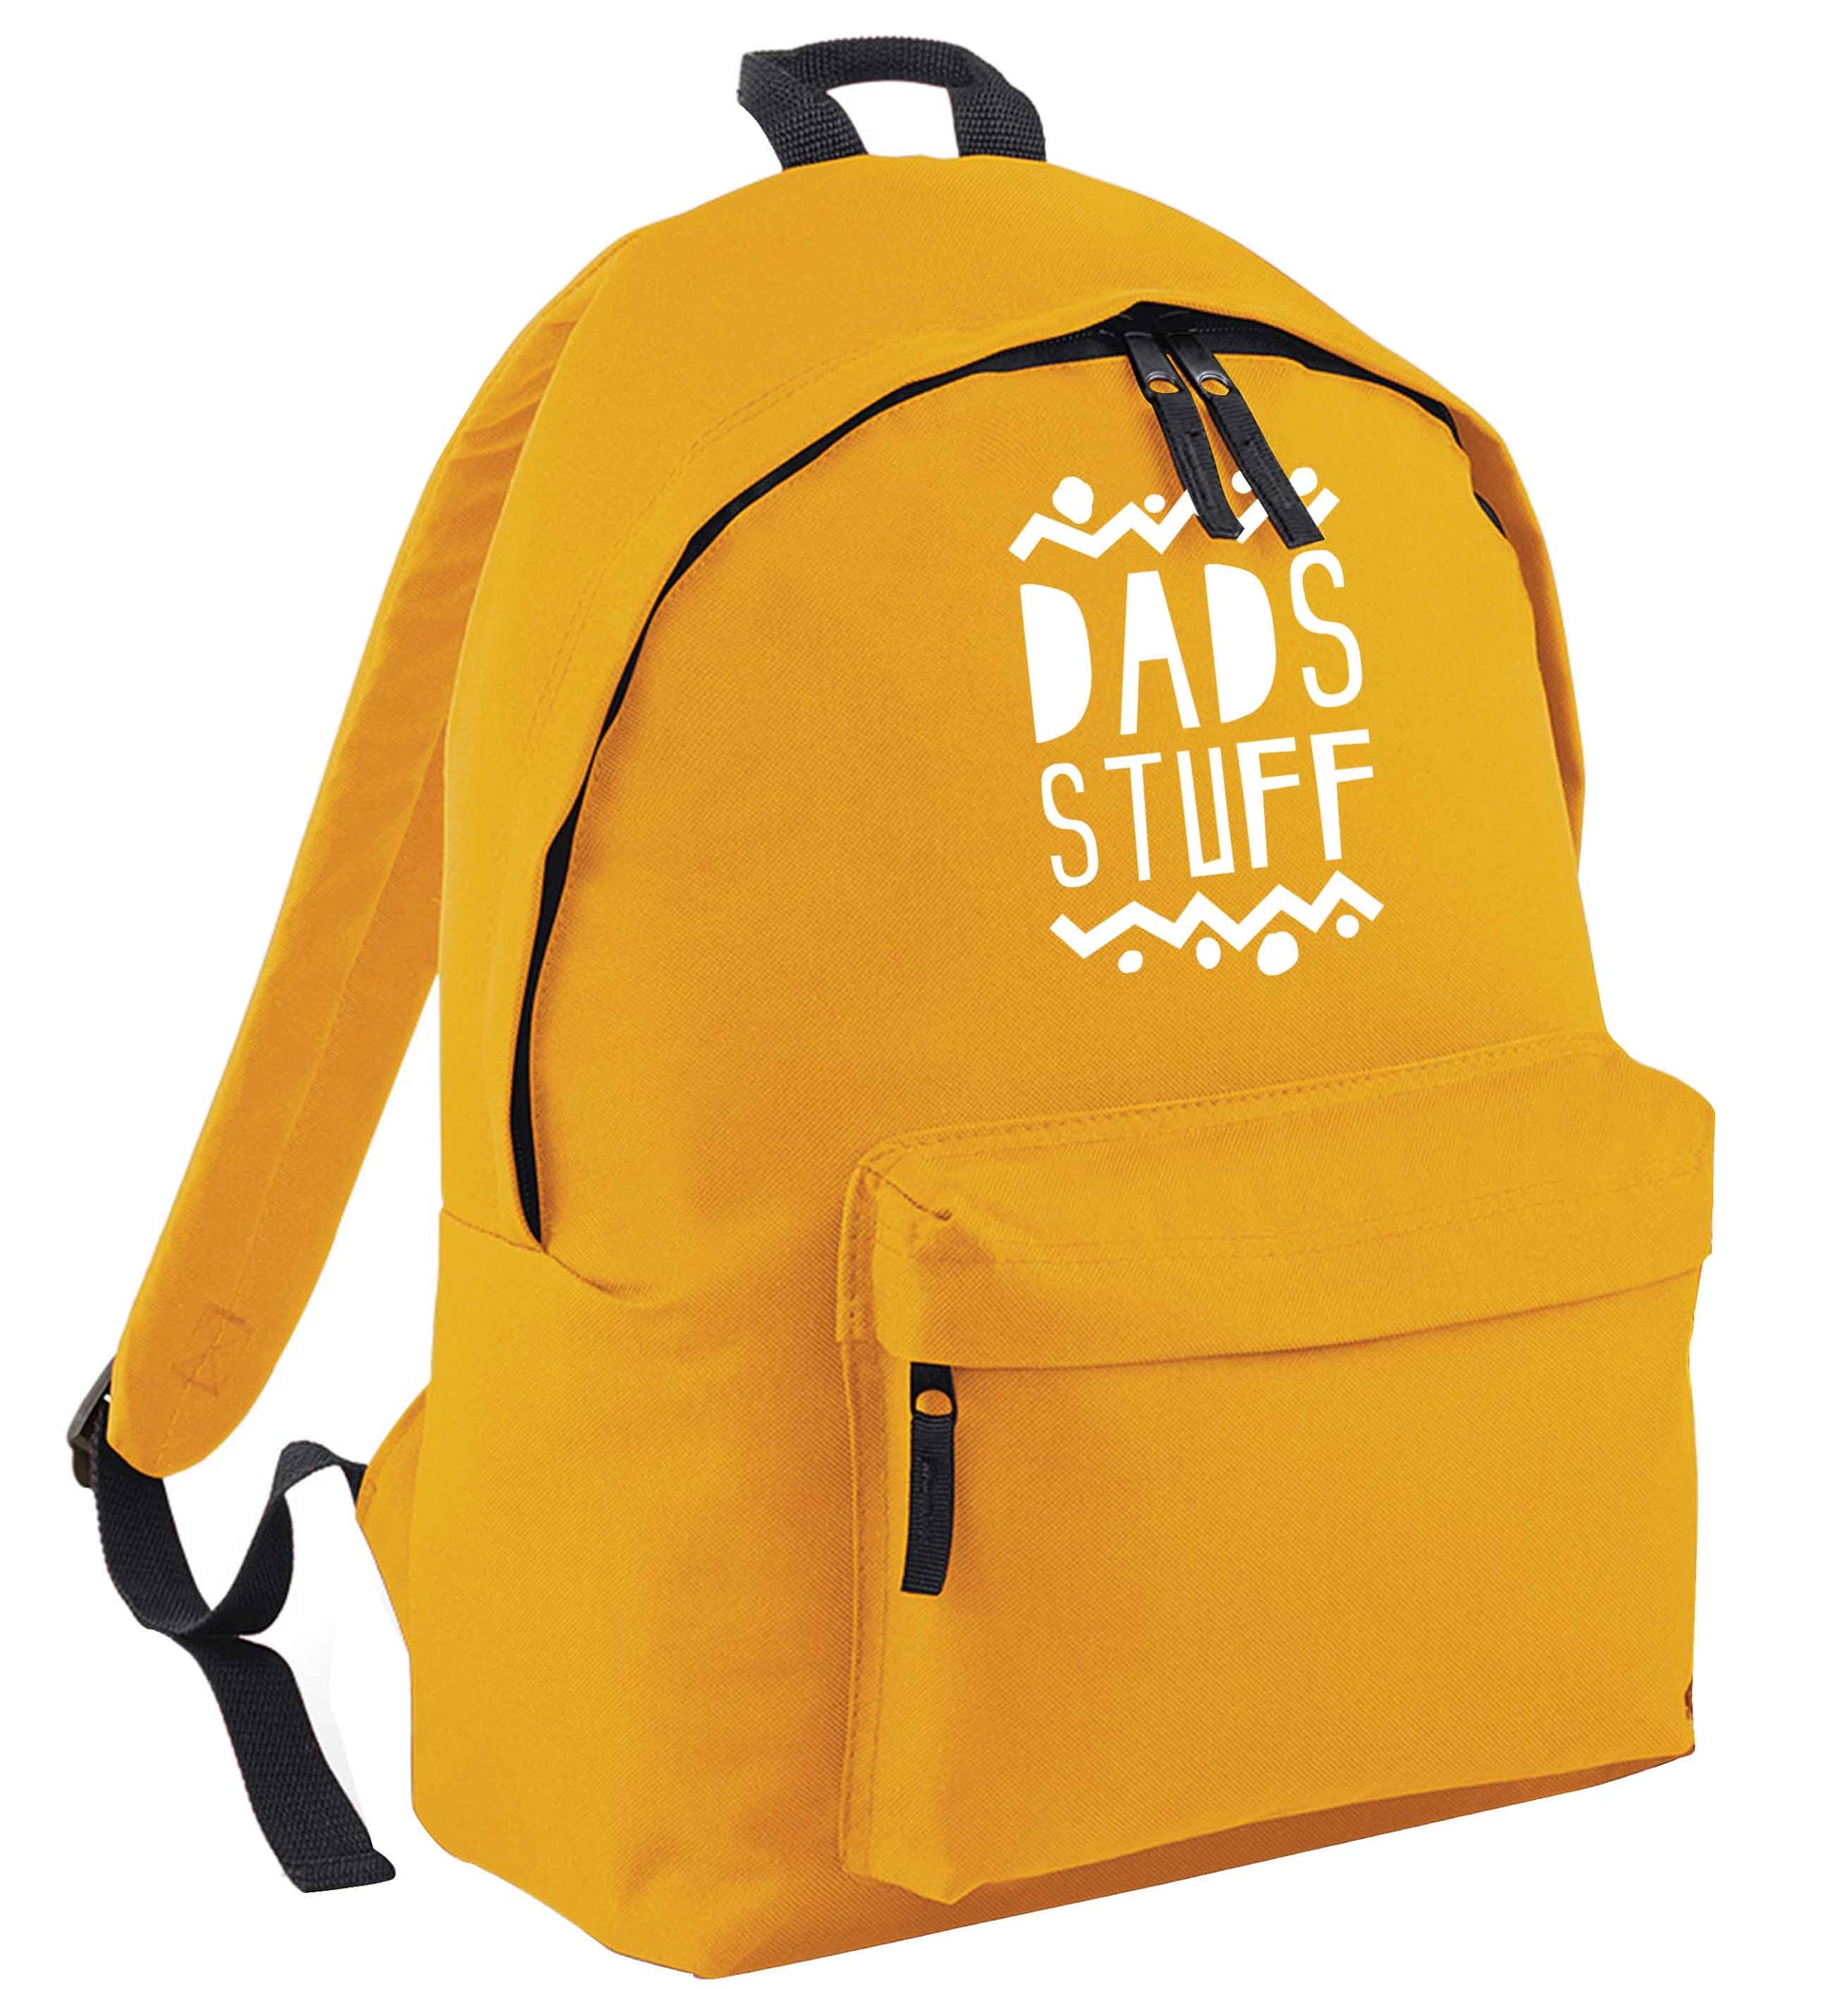 Dads stuff mustard adults backpack